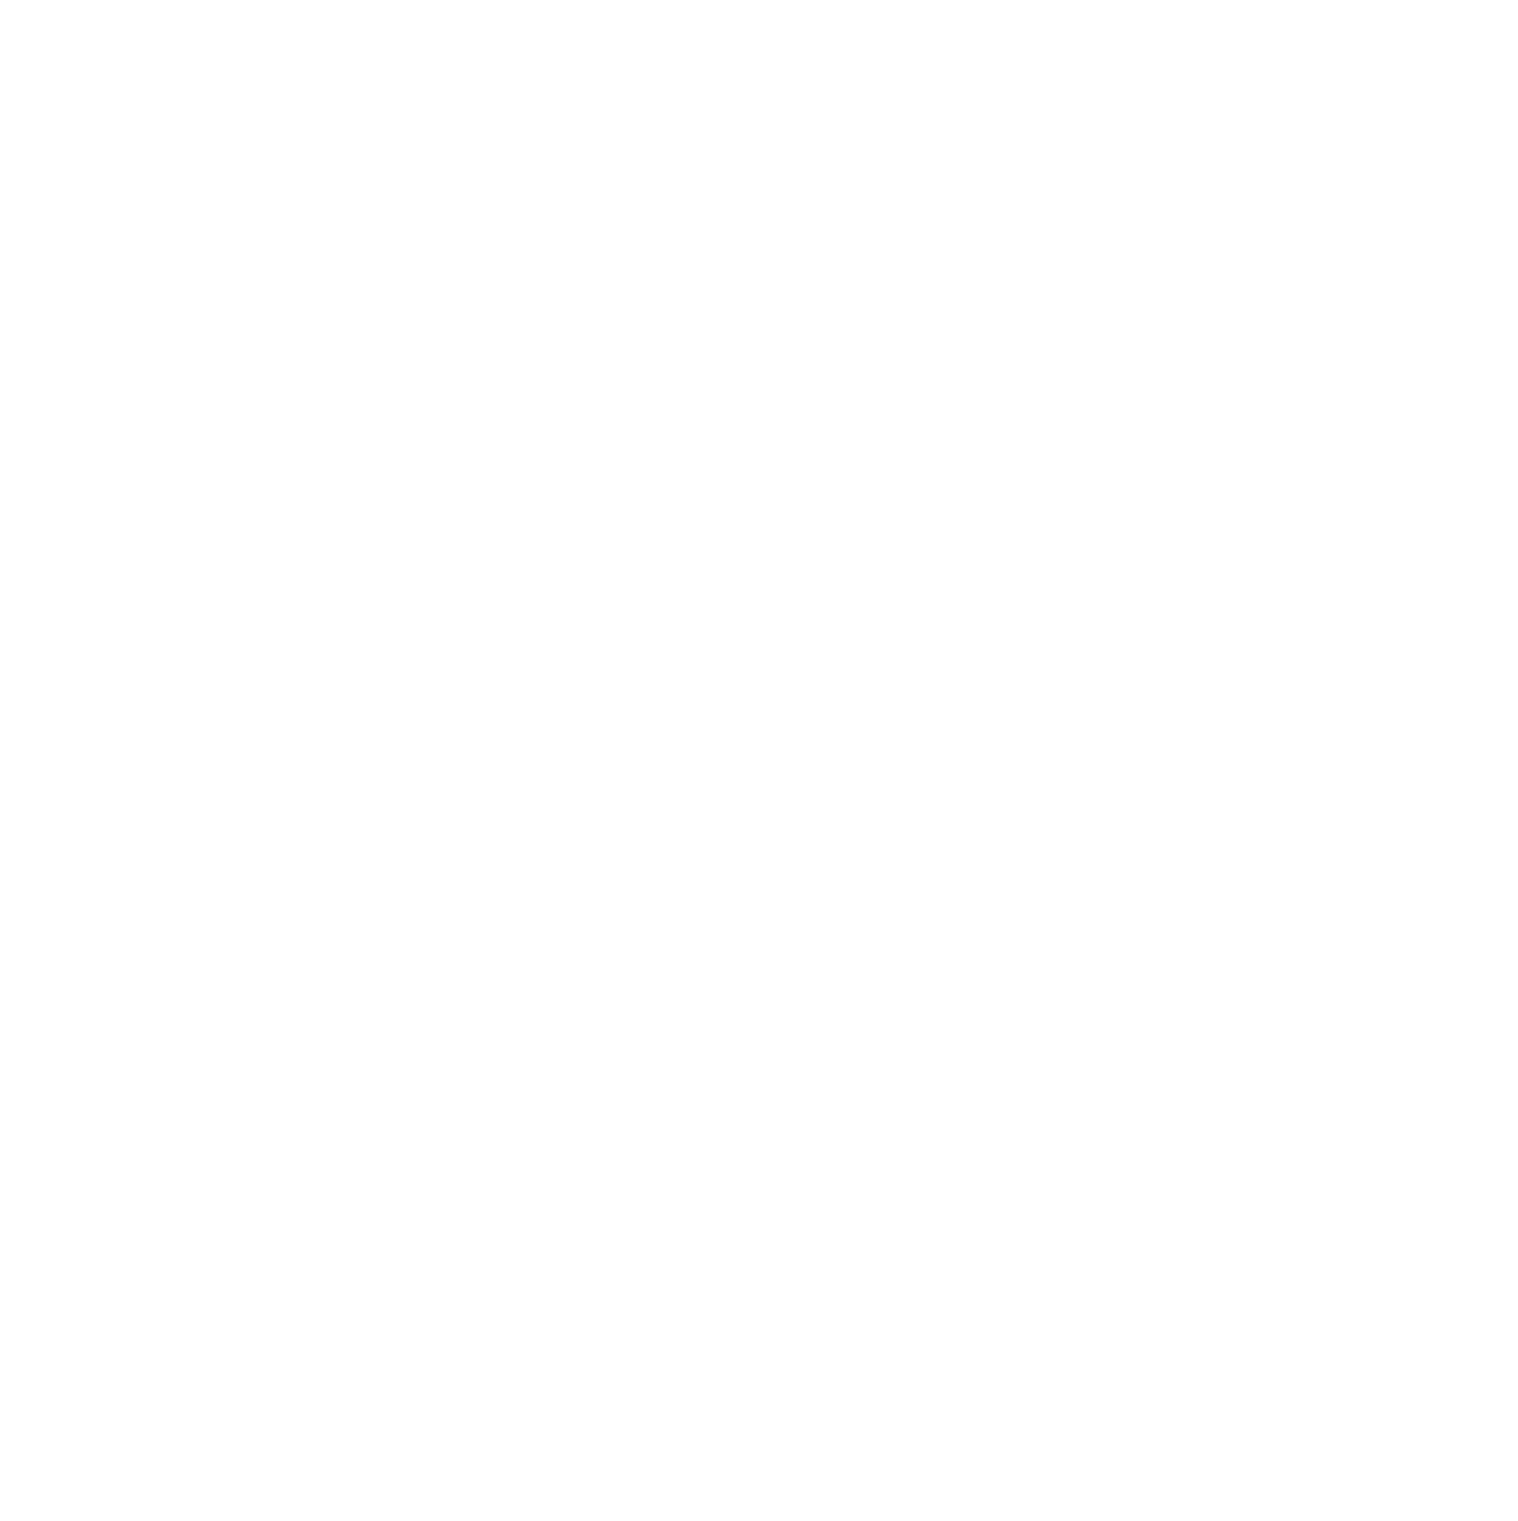 Farmers & Merchants Bancorp logo for dark backgrounds (transparent PNG)